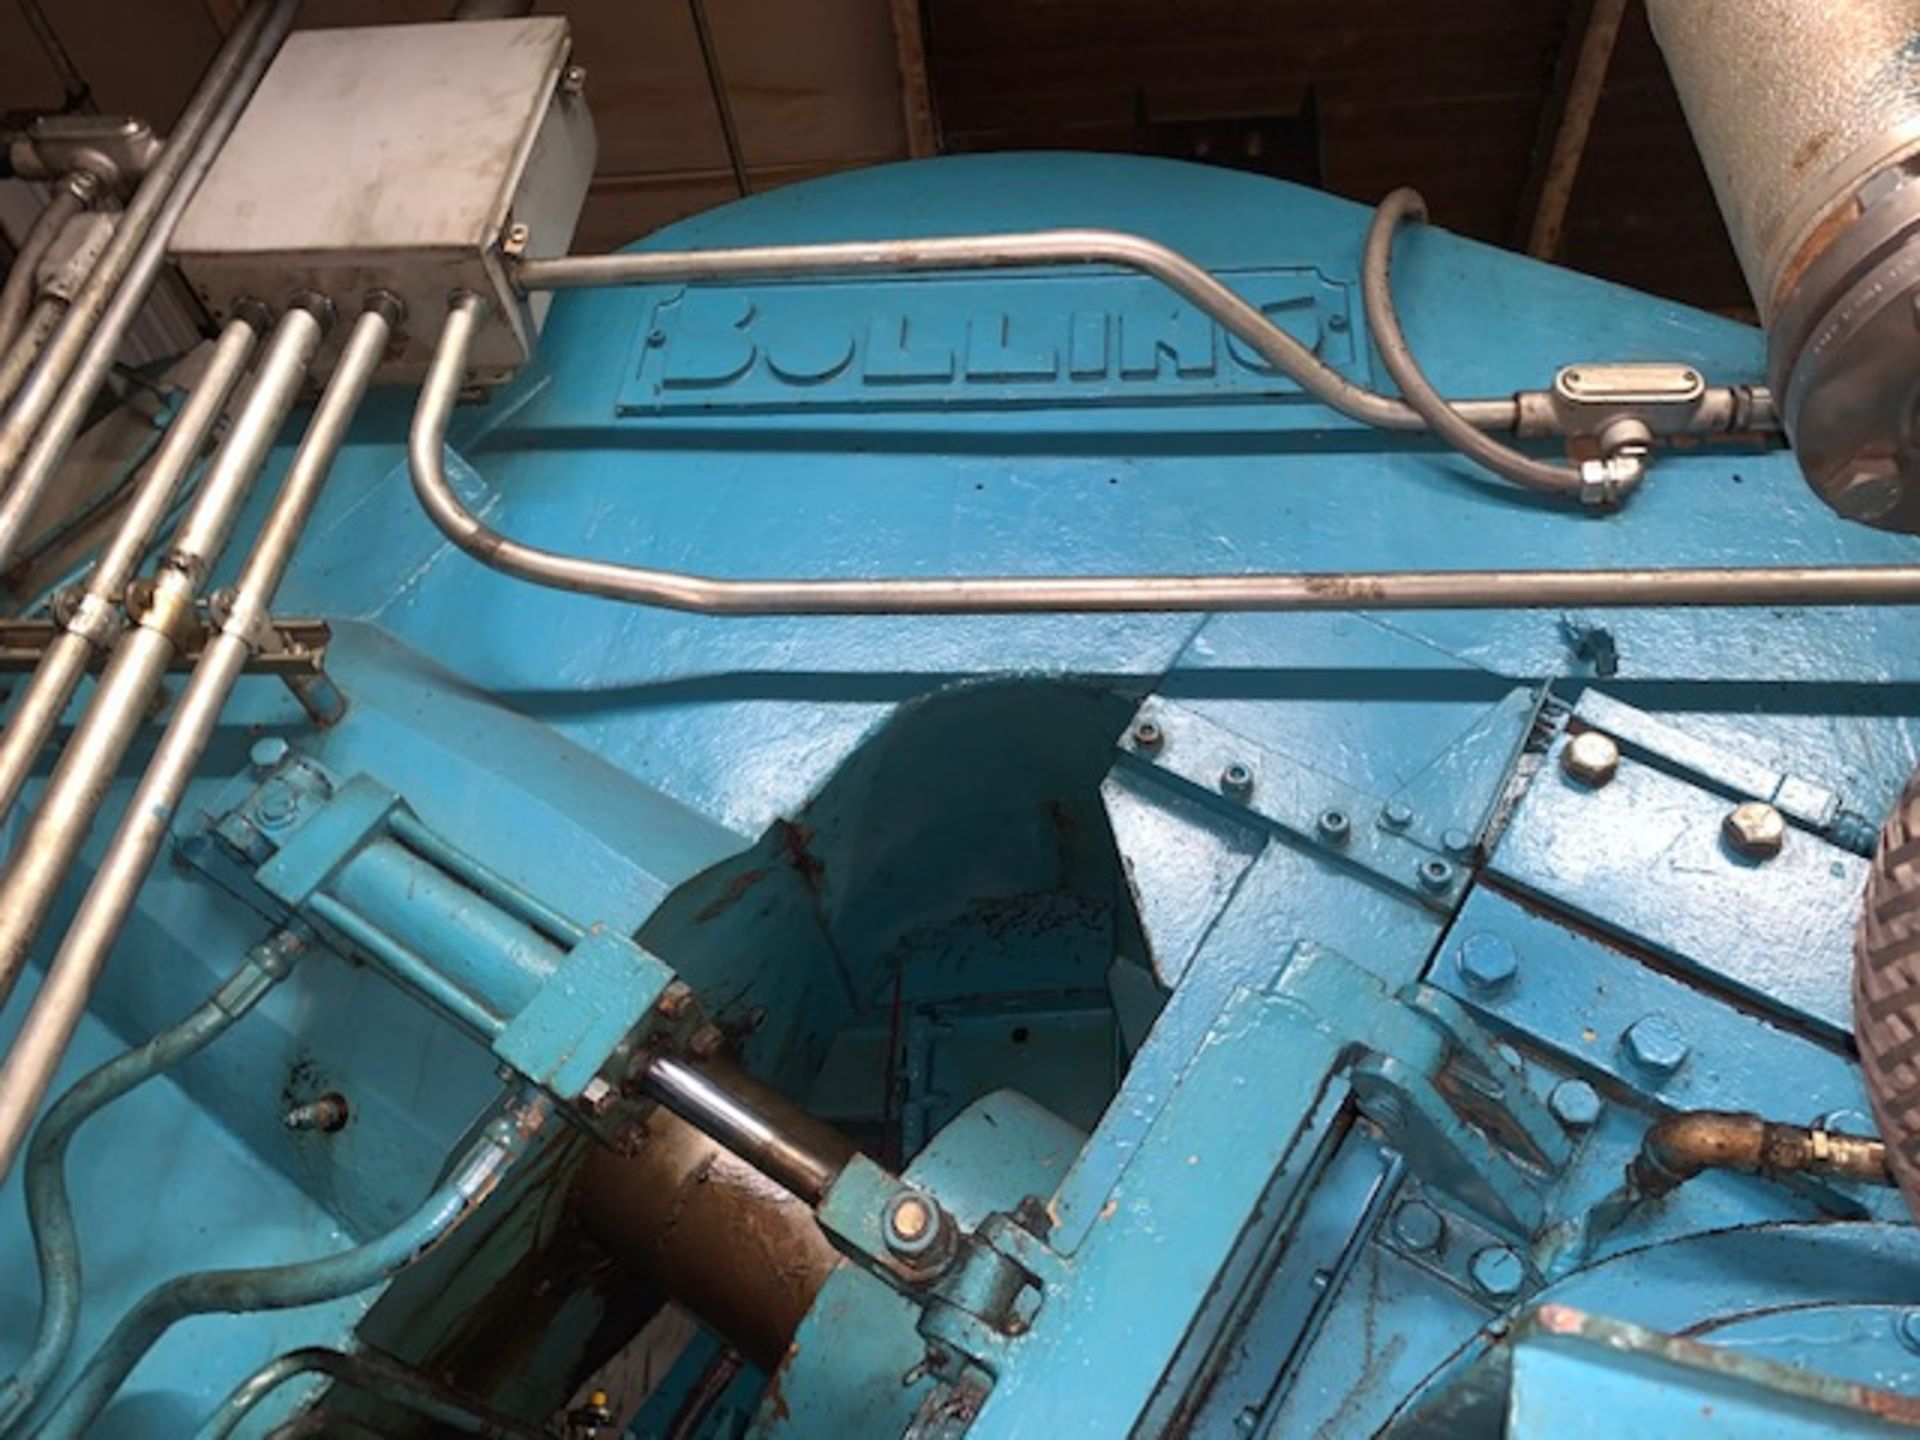 Stewart Bolling & Co. 2 Roll Rubber Calendar Mill, 250 HP, 28" Dia. x 72" Long Rolls, Serial# 13092 - Image 3 of 10